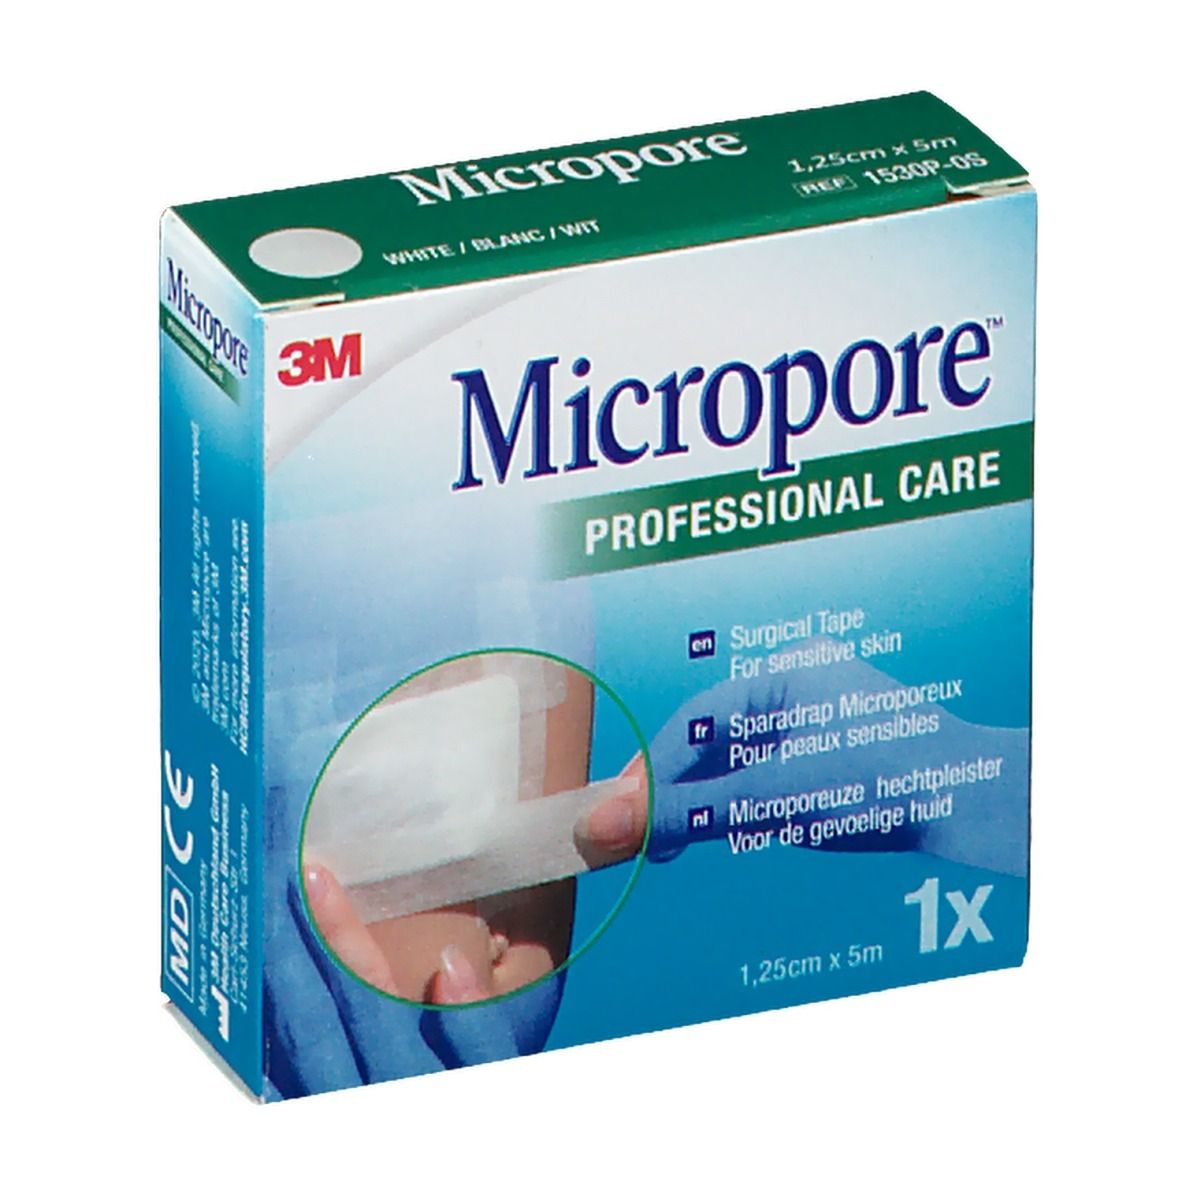 Micropore 3M sparadrap microporeux